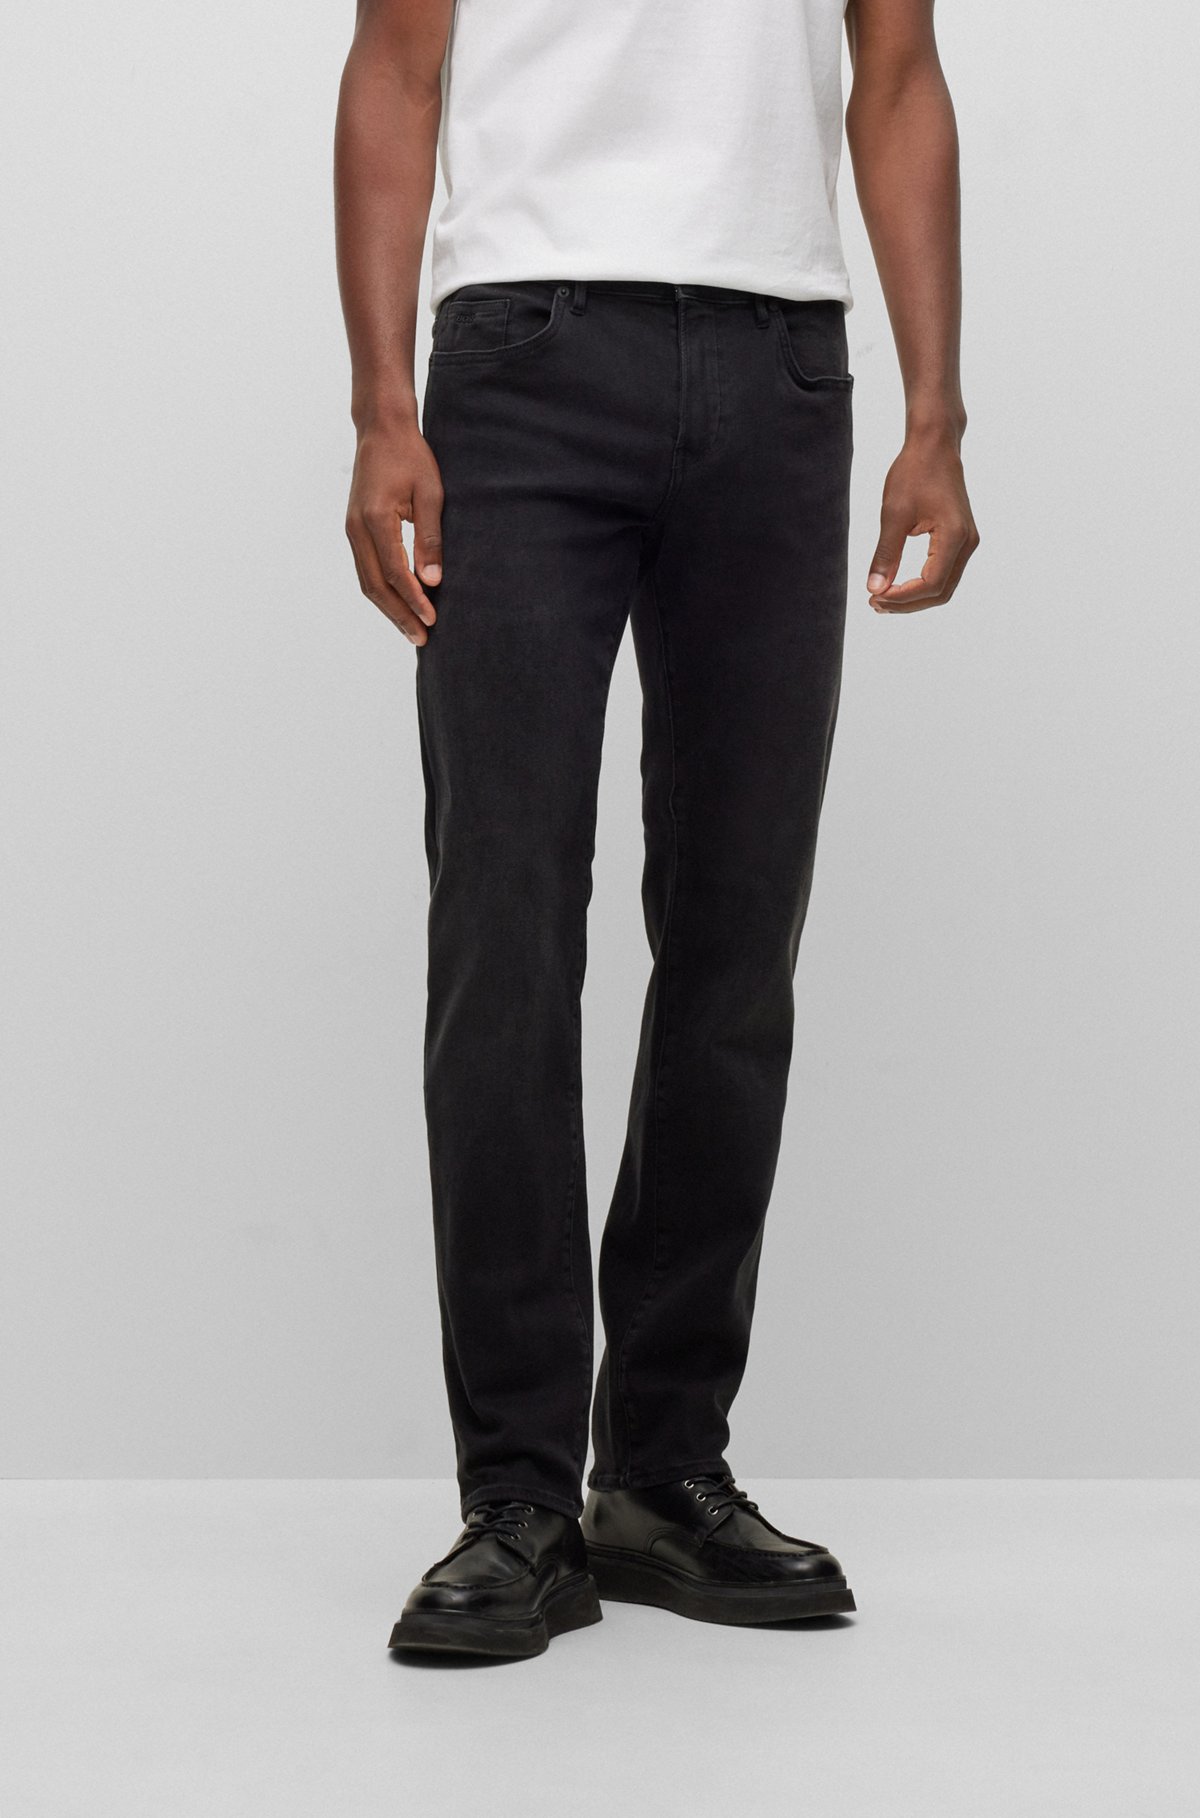 BOSS   Slim fit jeans in black black supreme movement denim